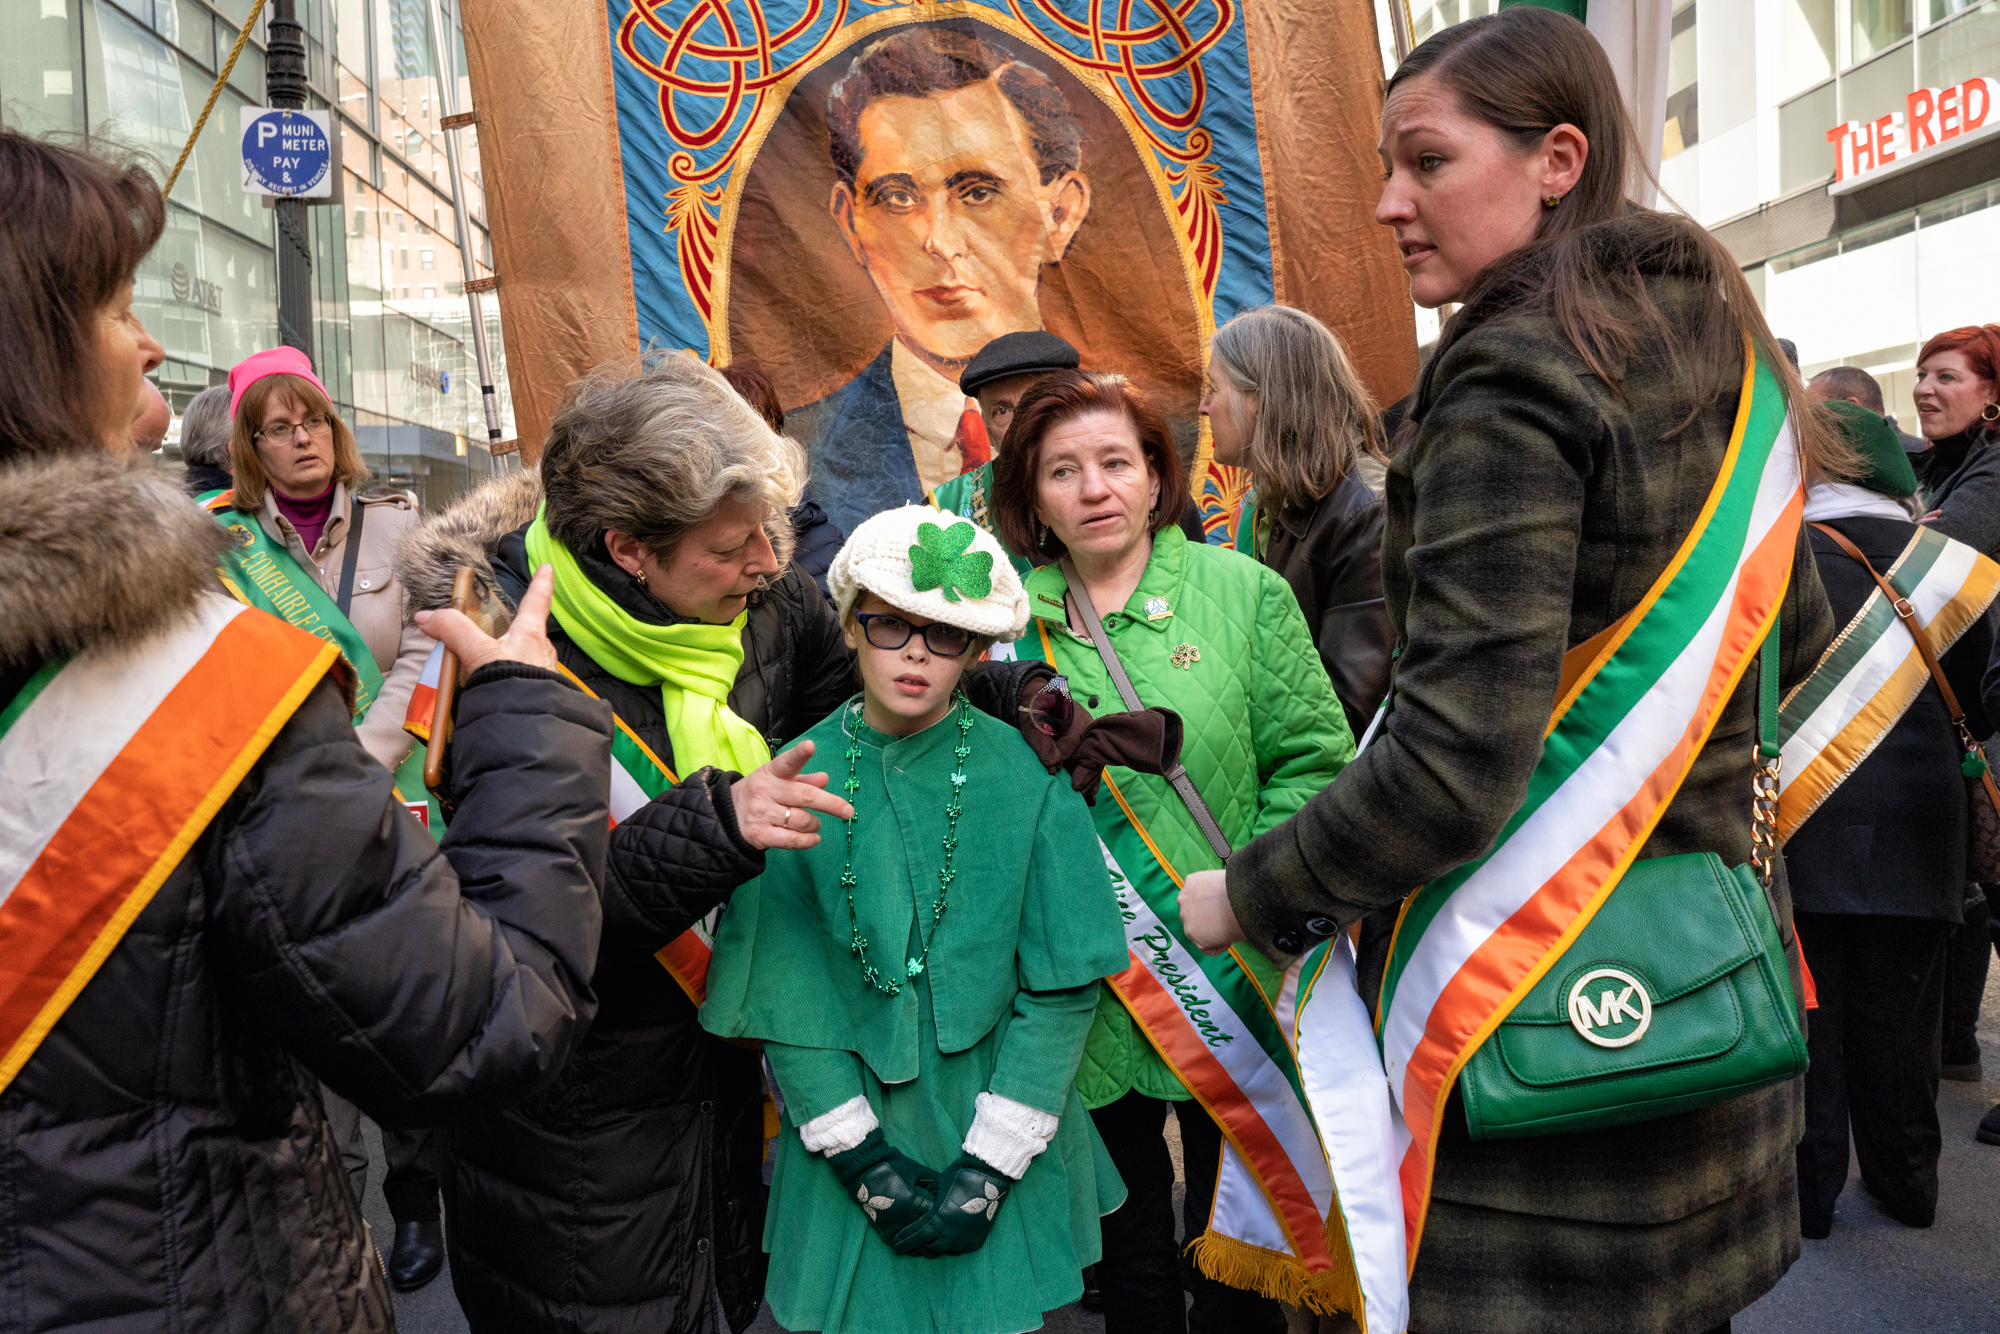 St. Patrick's Day Parade, 2019